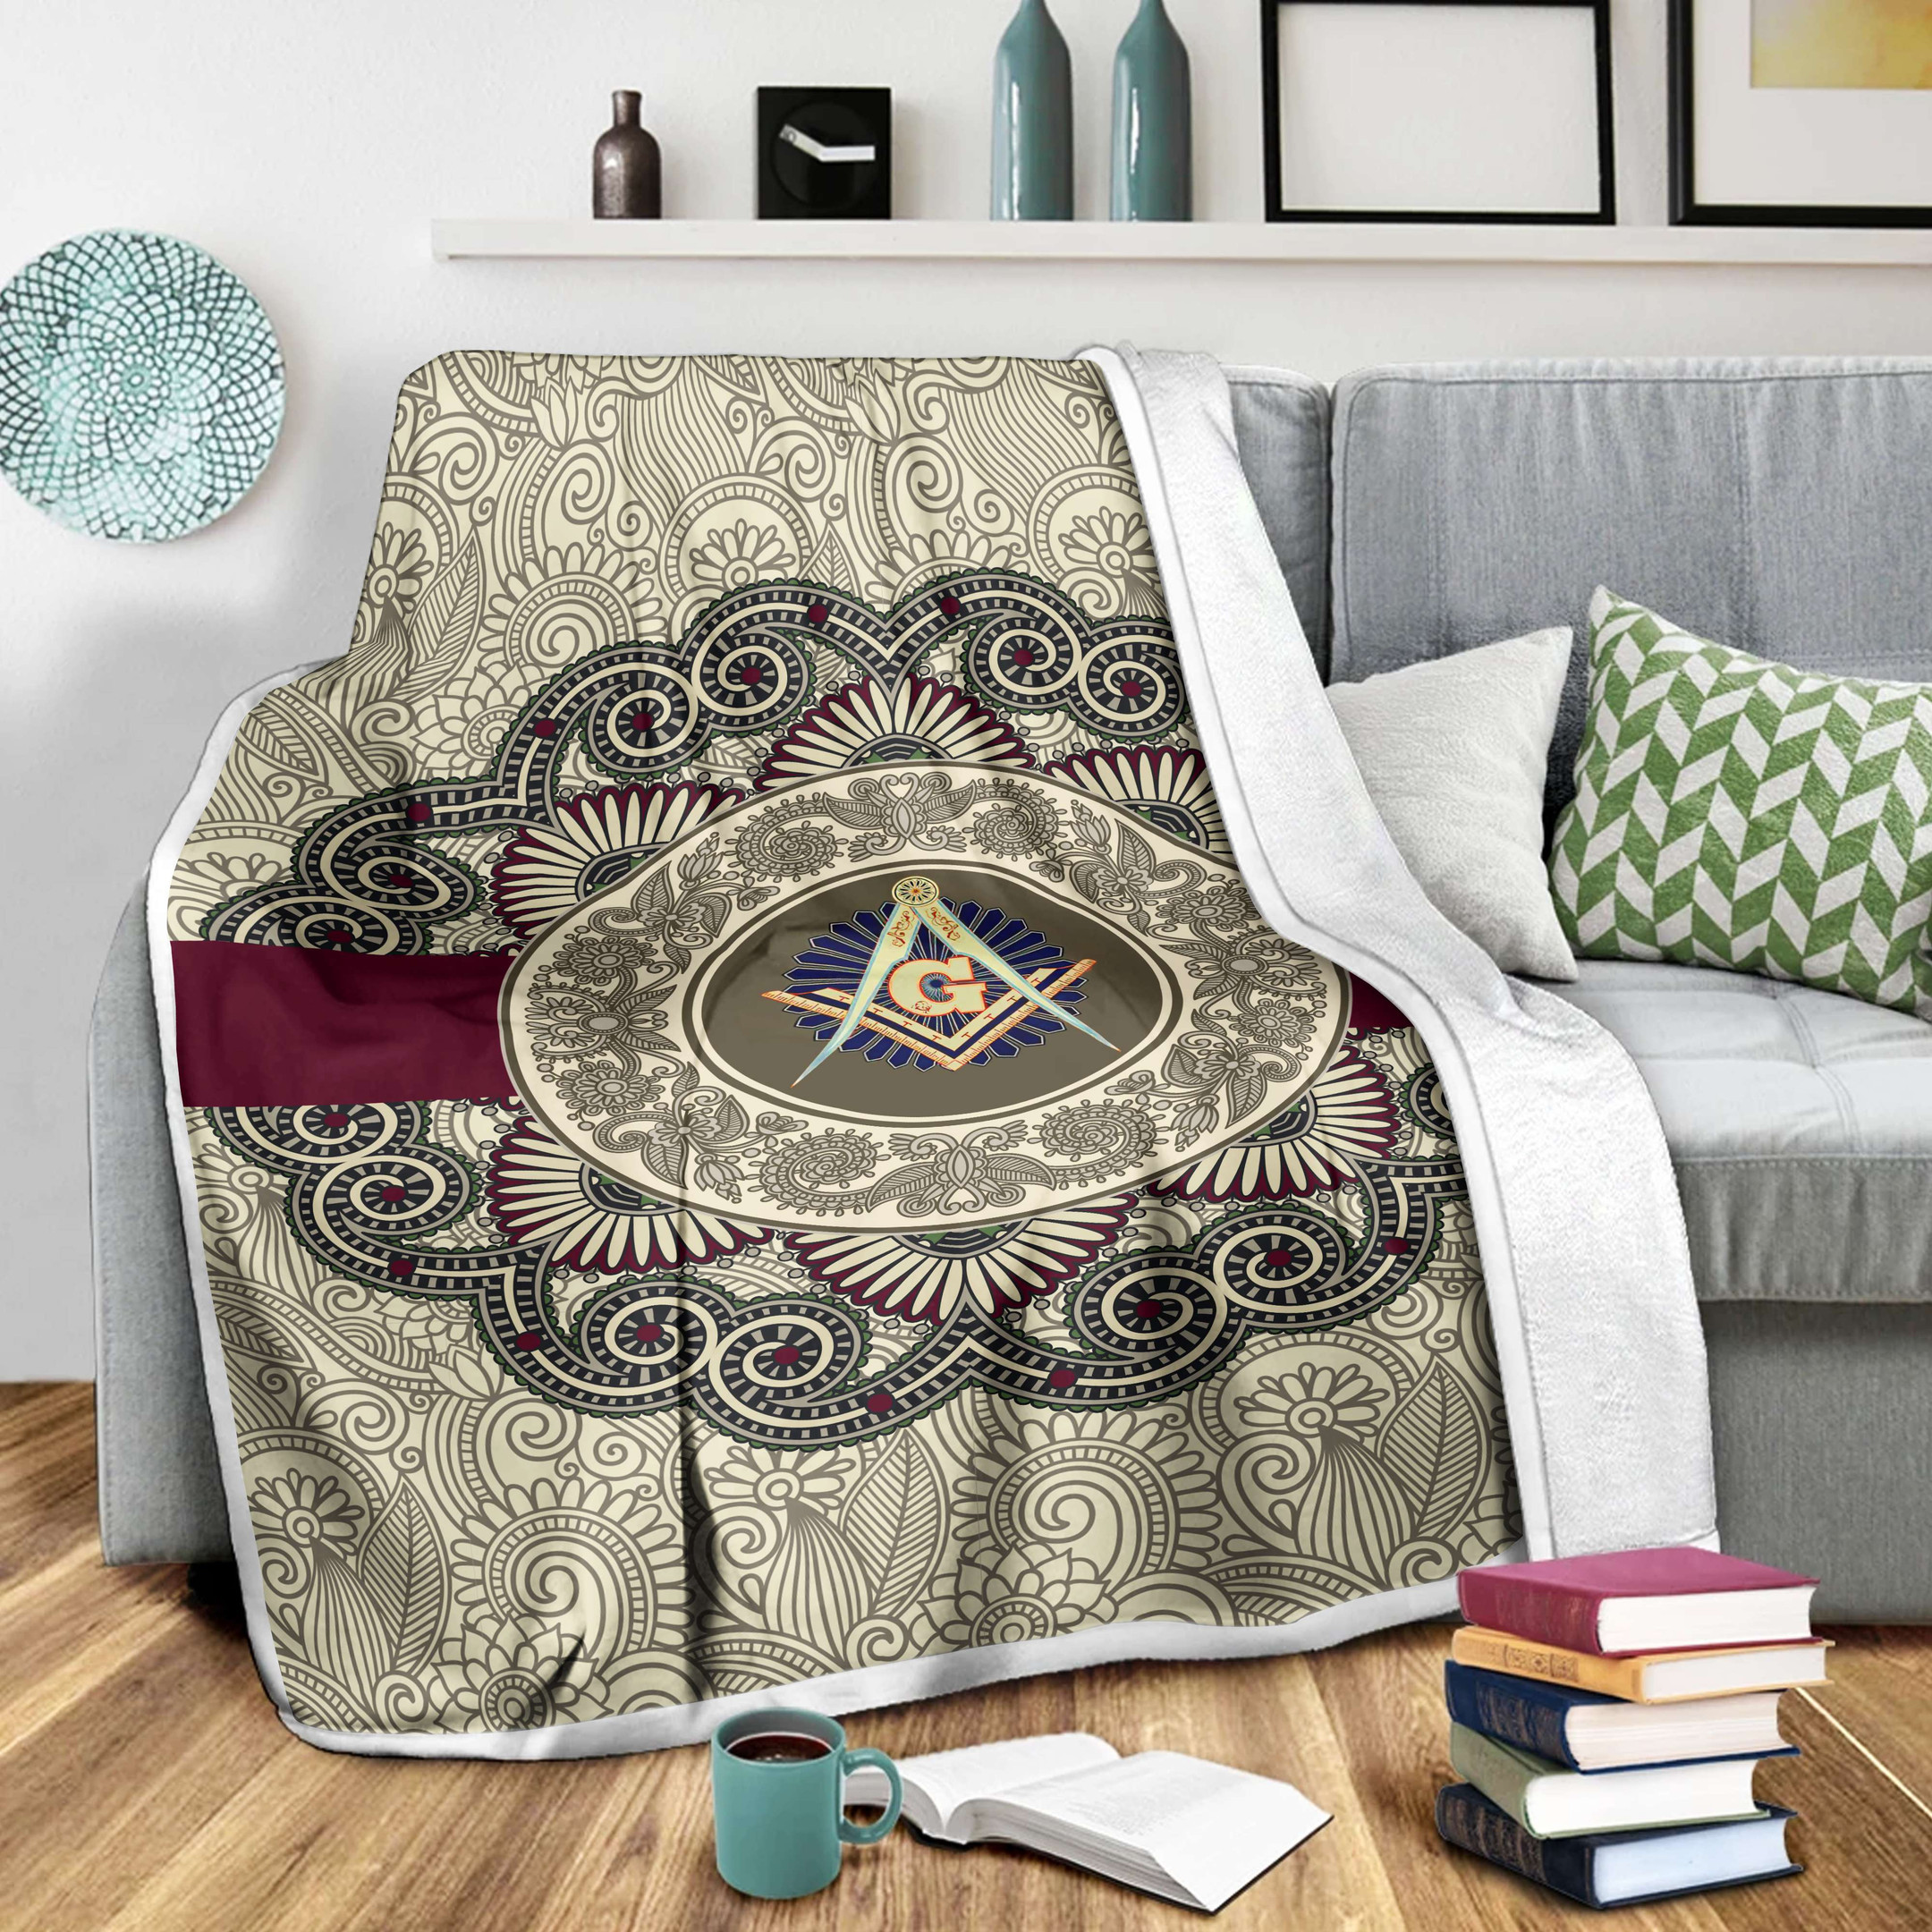 Tmarc Tee Freemasonry Soft and Warm Blanket